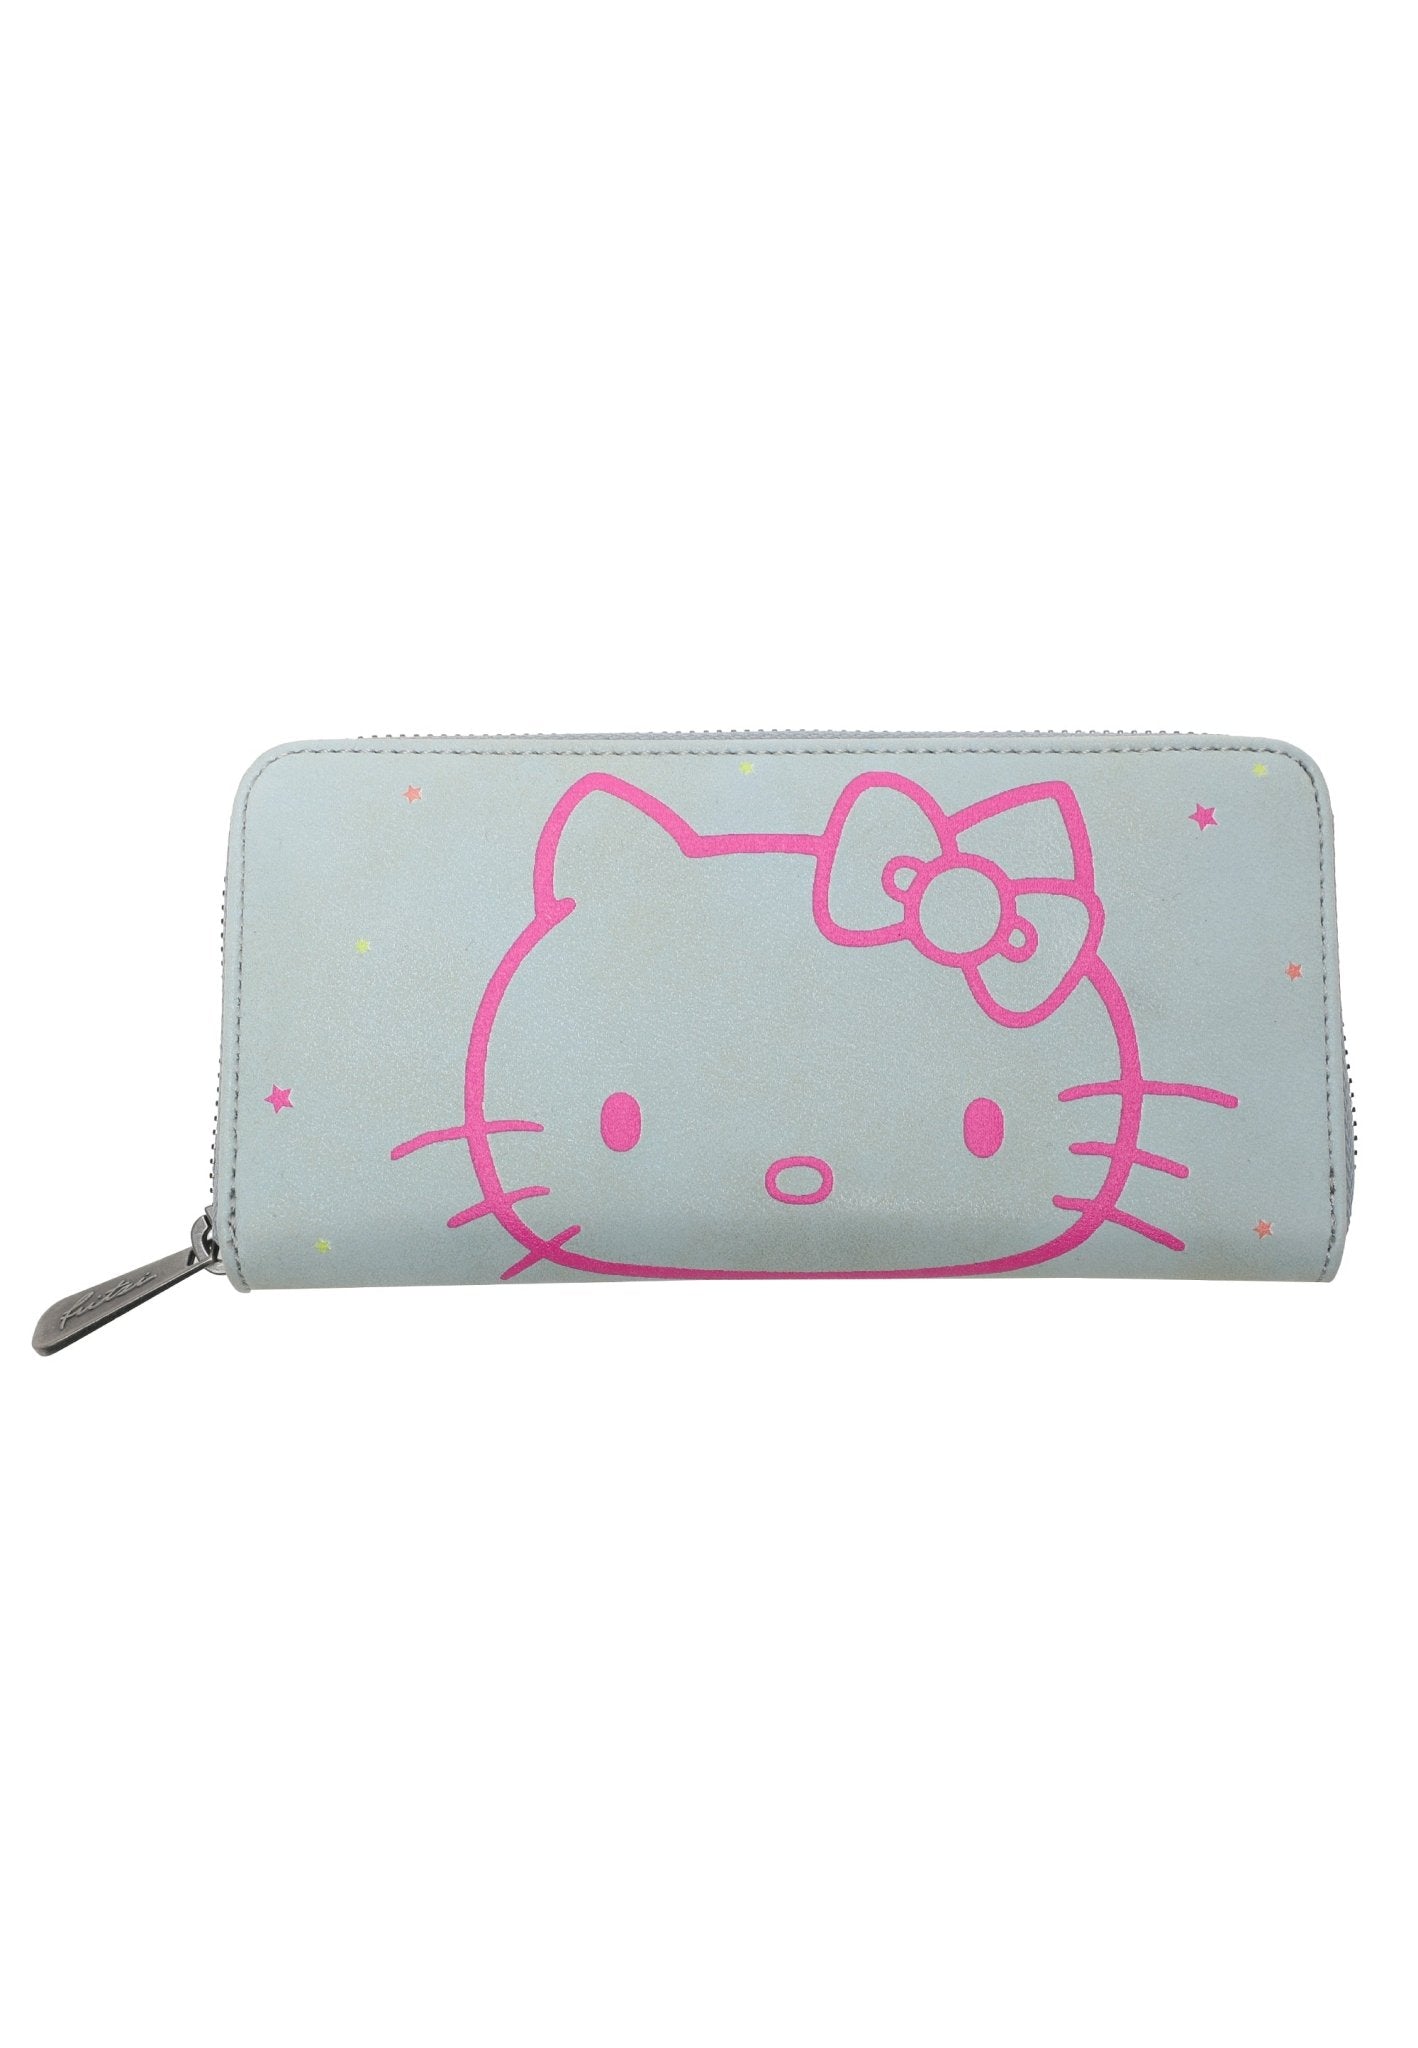 Hello Kitty fritzi limited Wallet - Fritzi aus Preußen - Kitty Blue